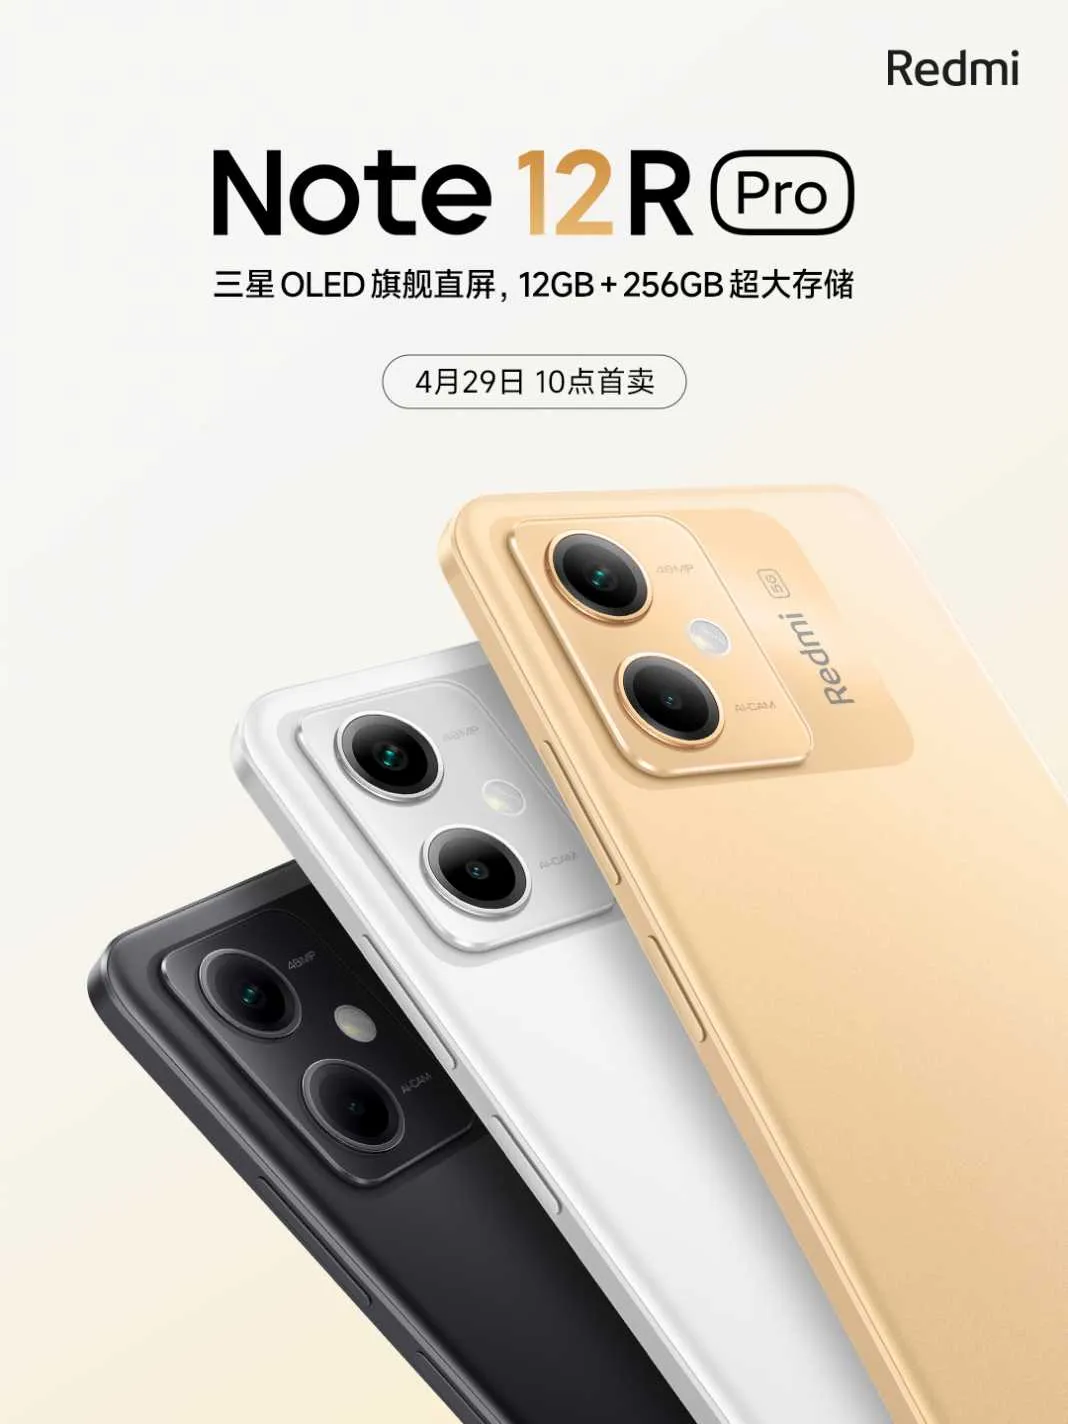 Redmi Note 12R Pro özellikleri